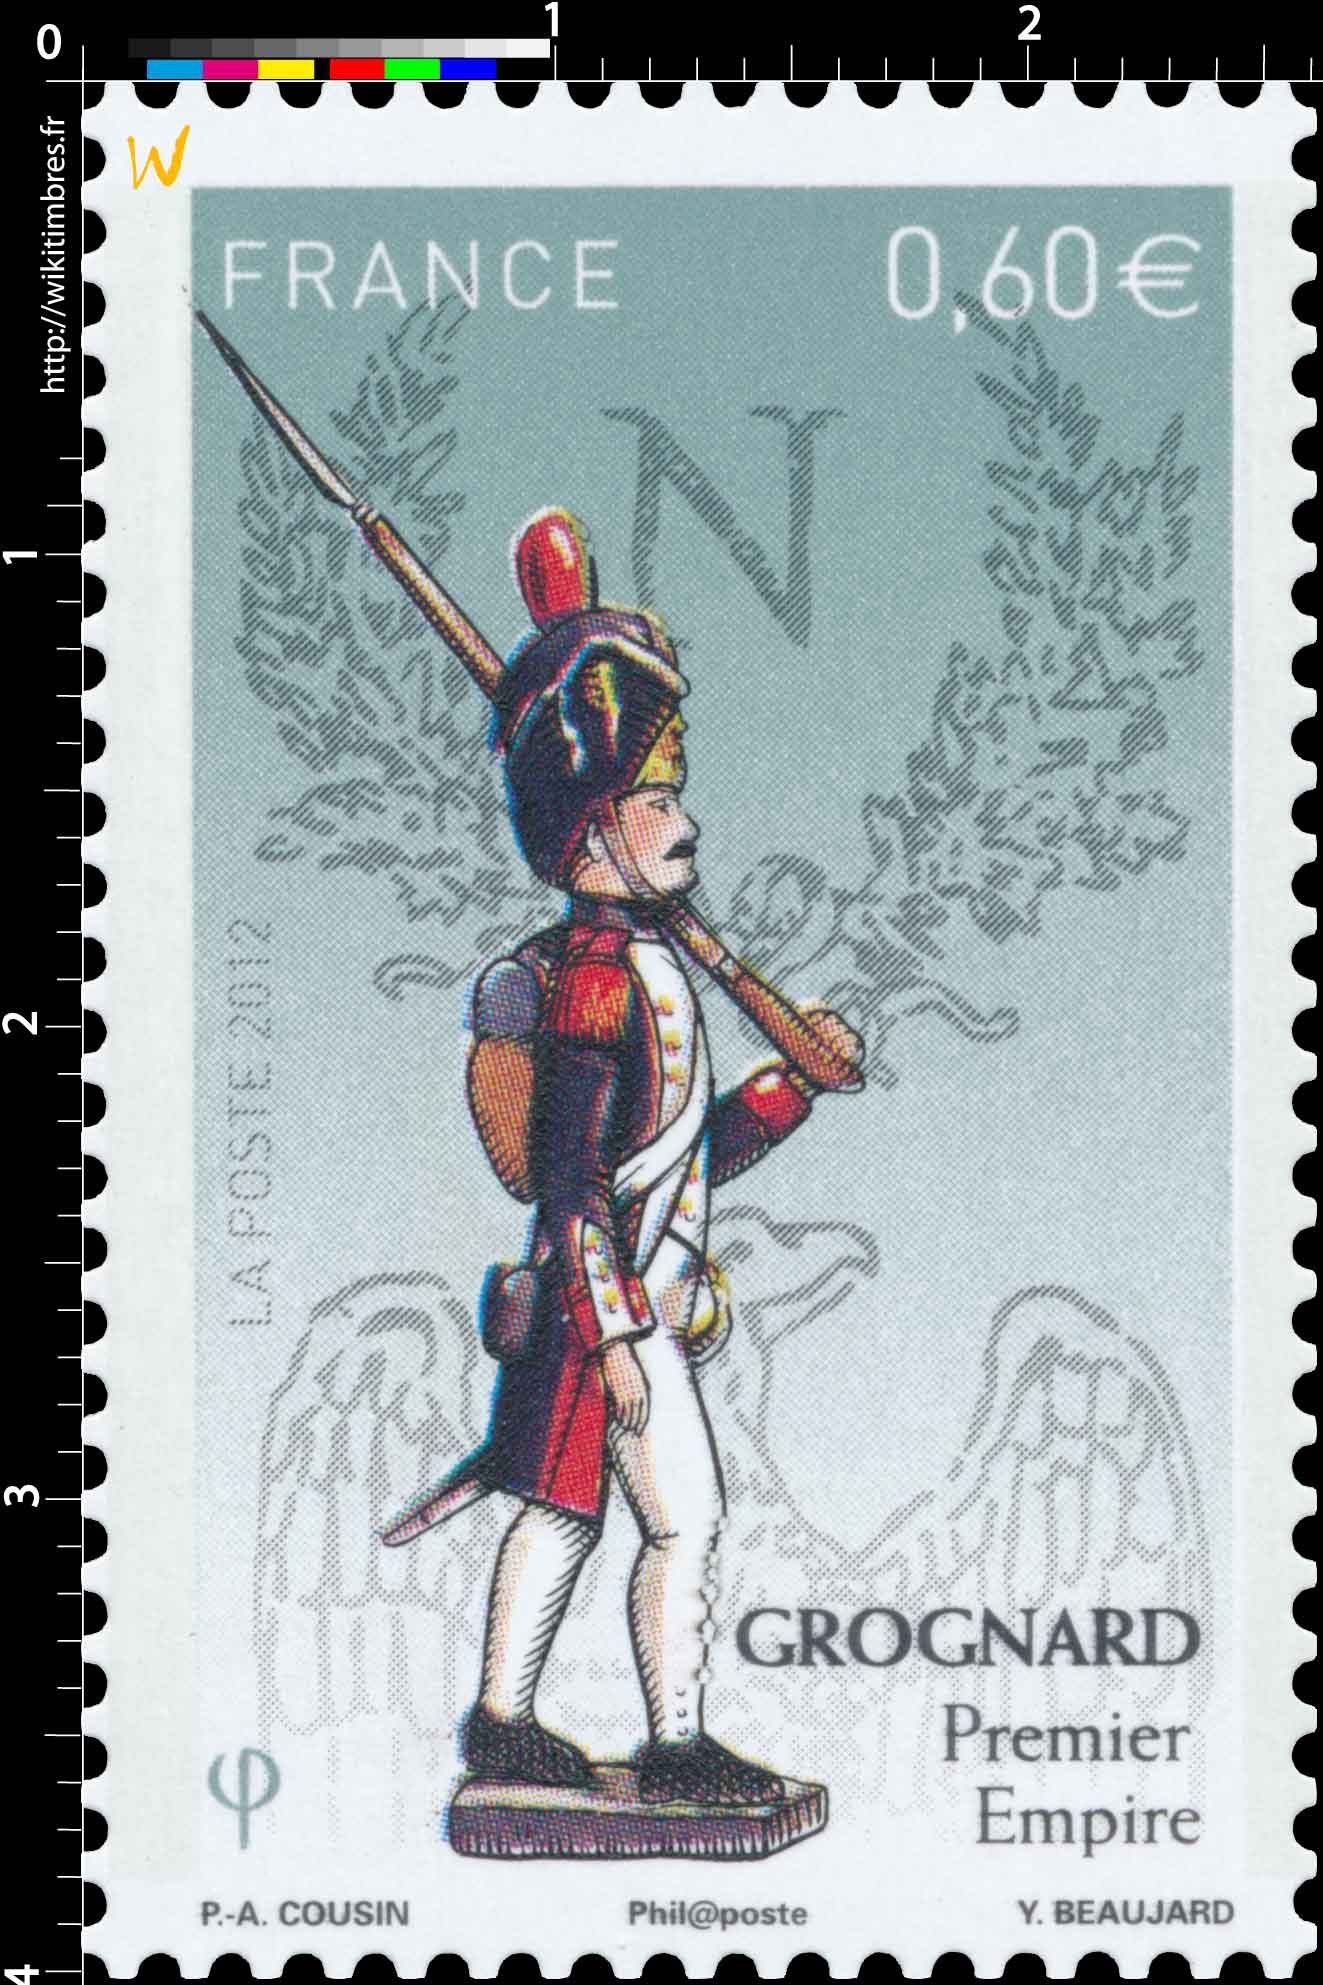 2012 Grognard premier empire